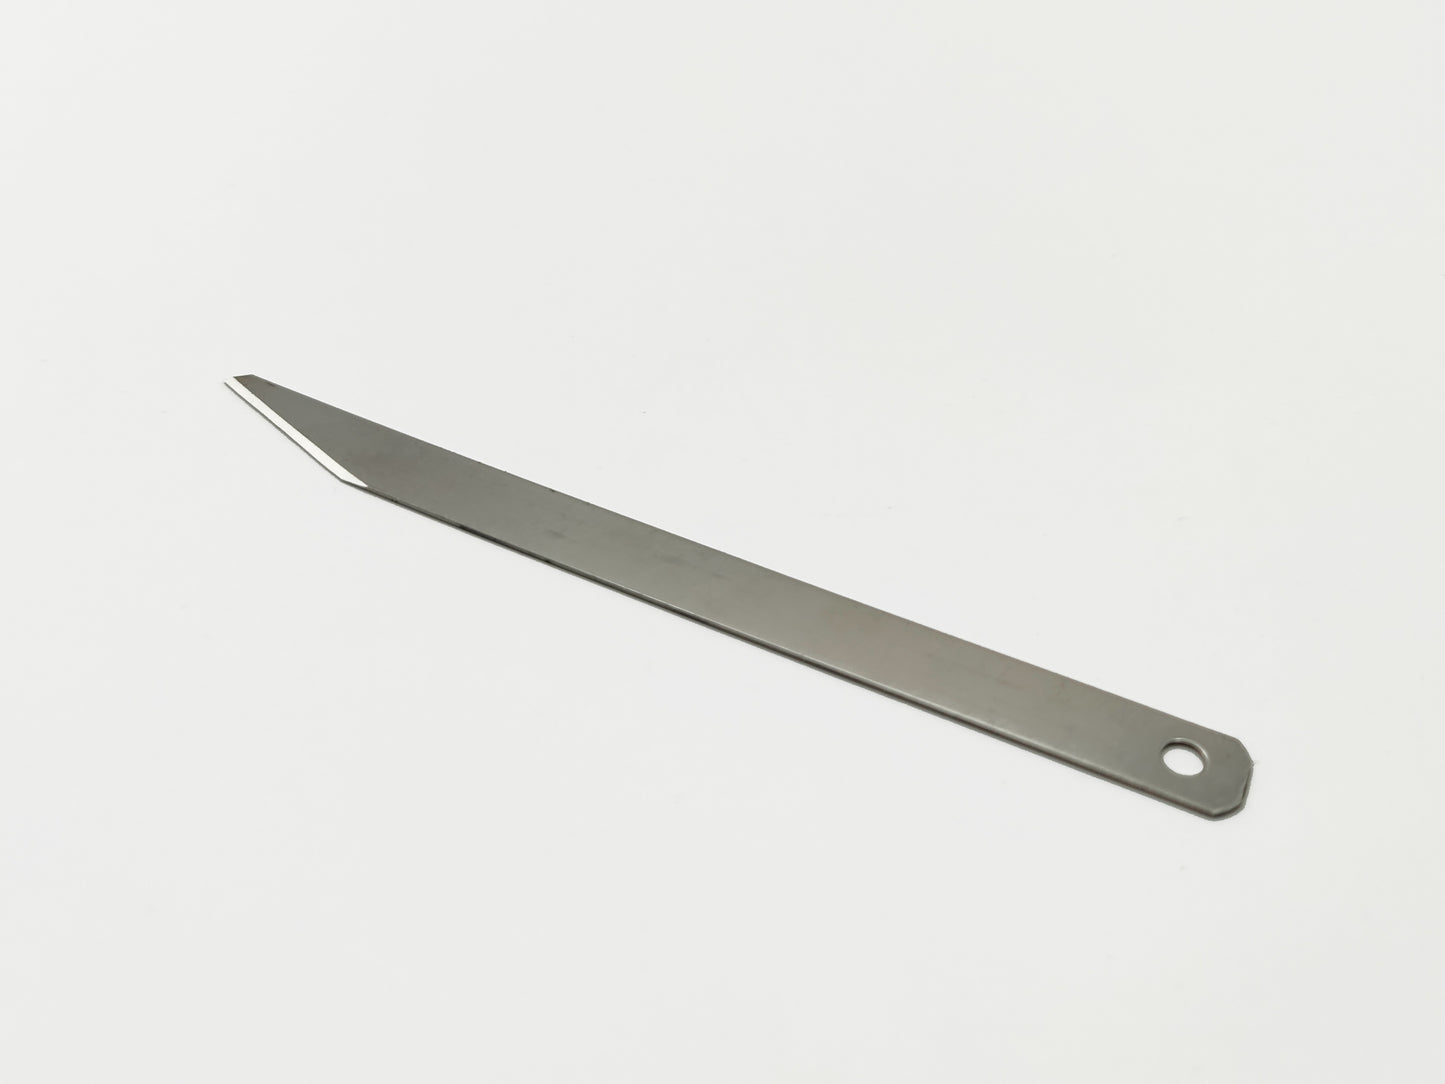 CLICKER KNIFE BLADES - CURVE & BEVEL (pack of 3)